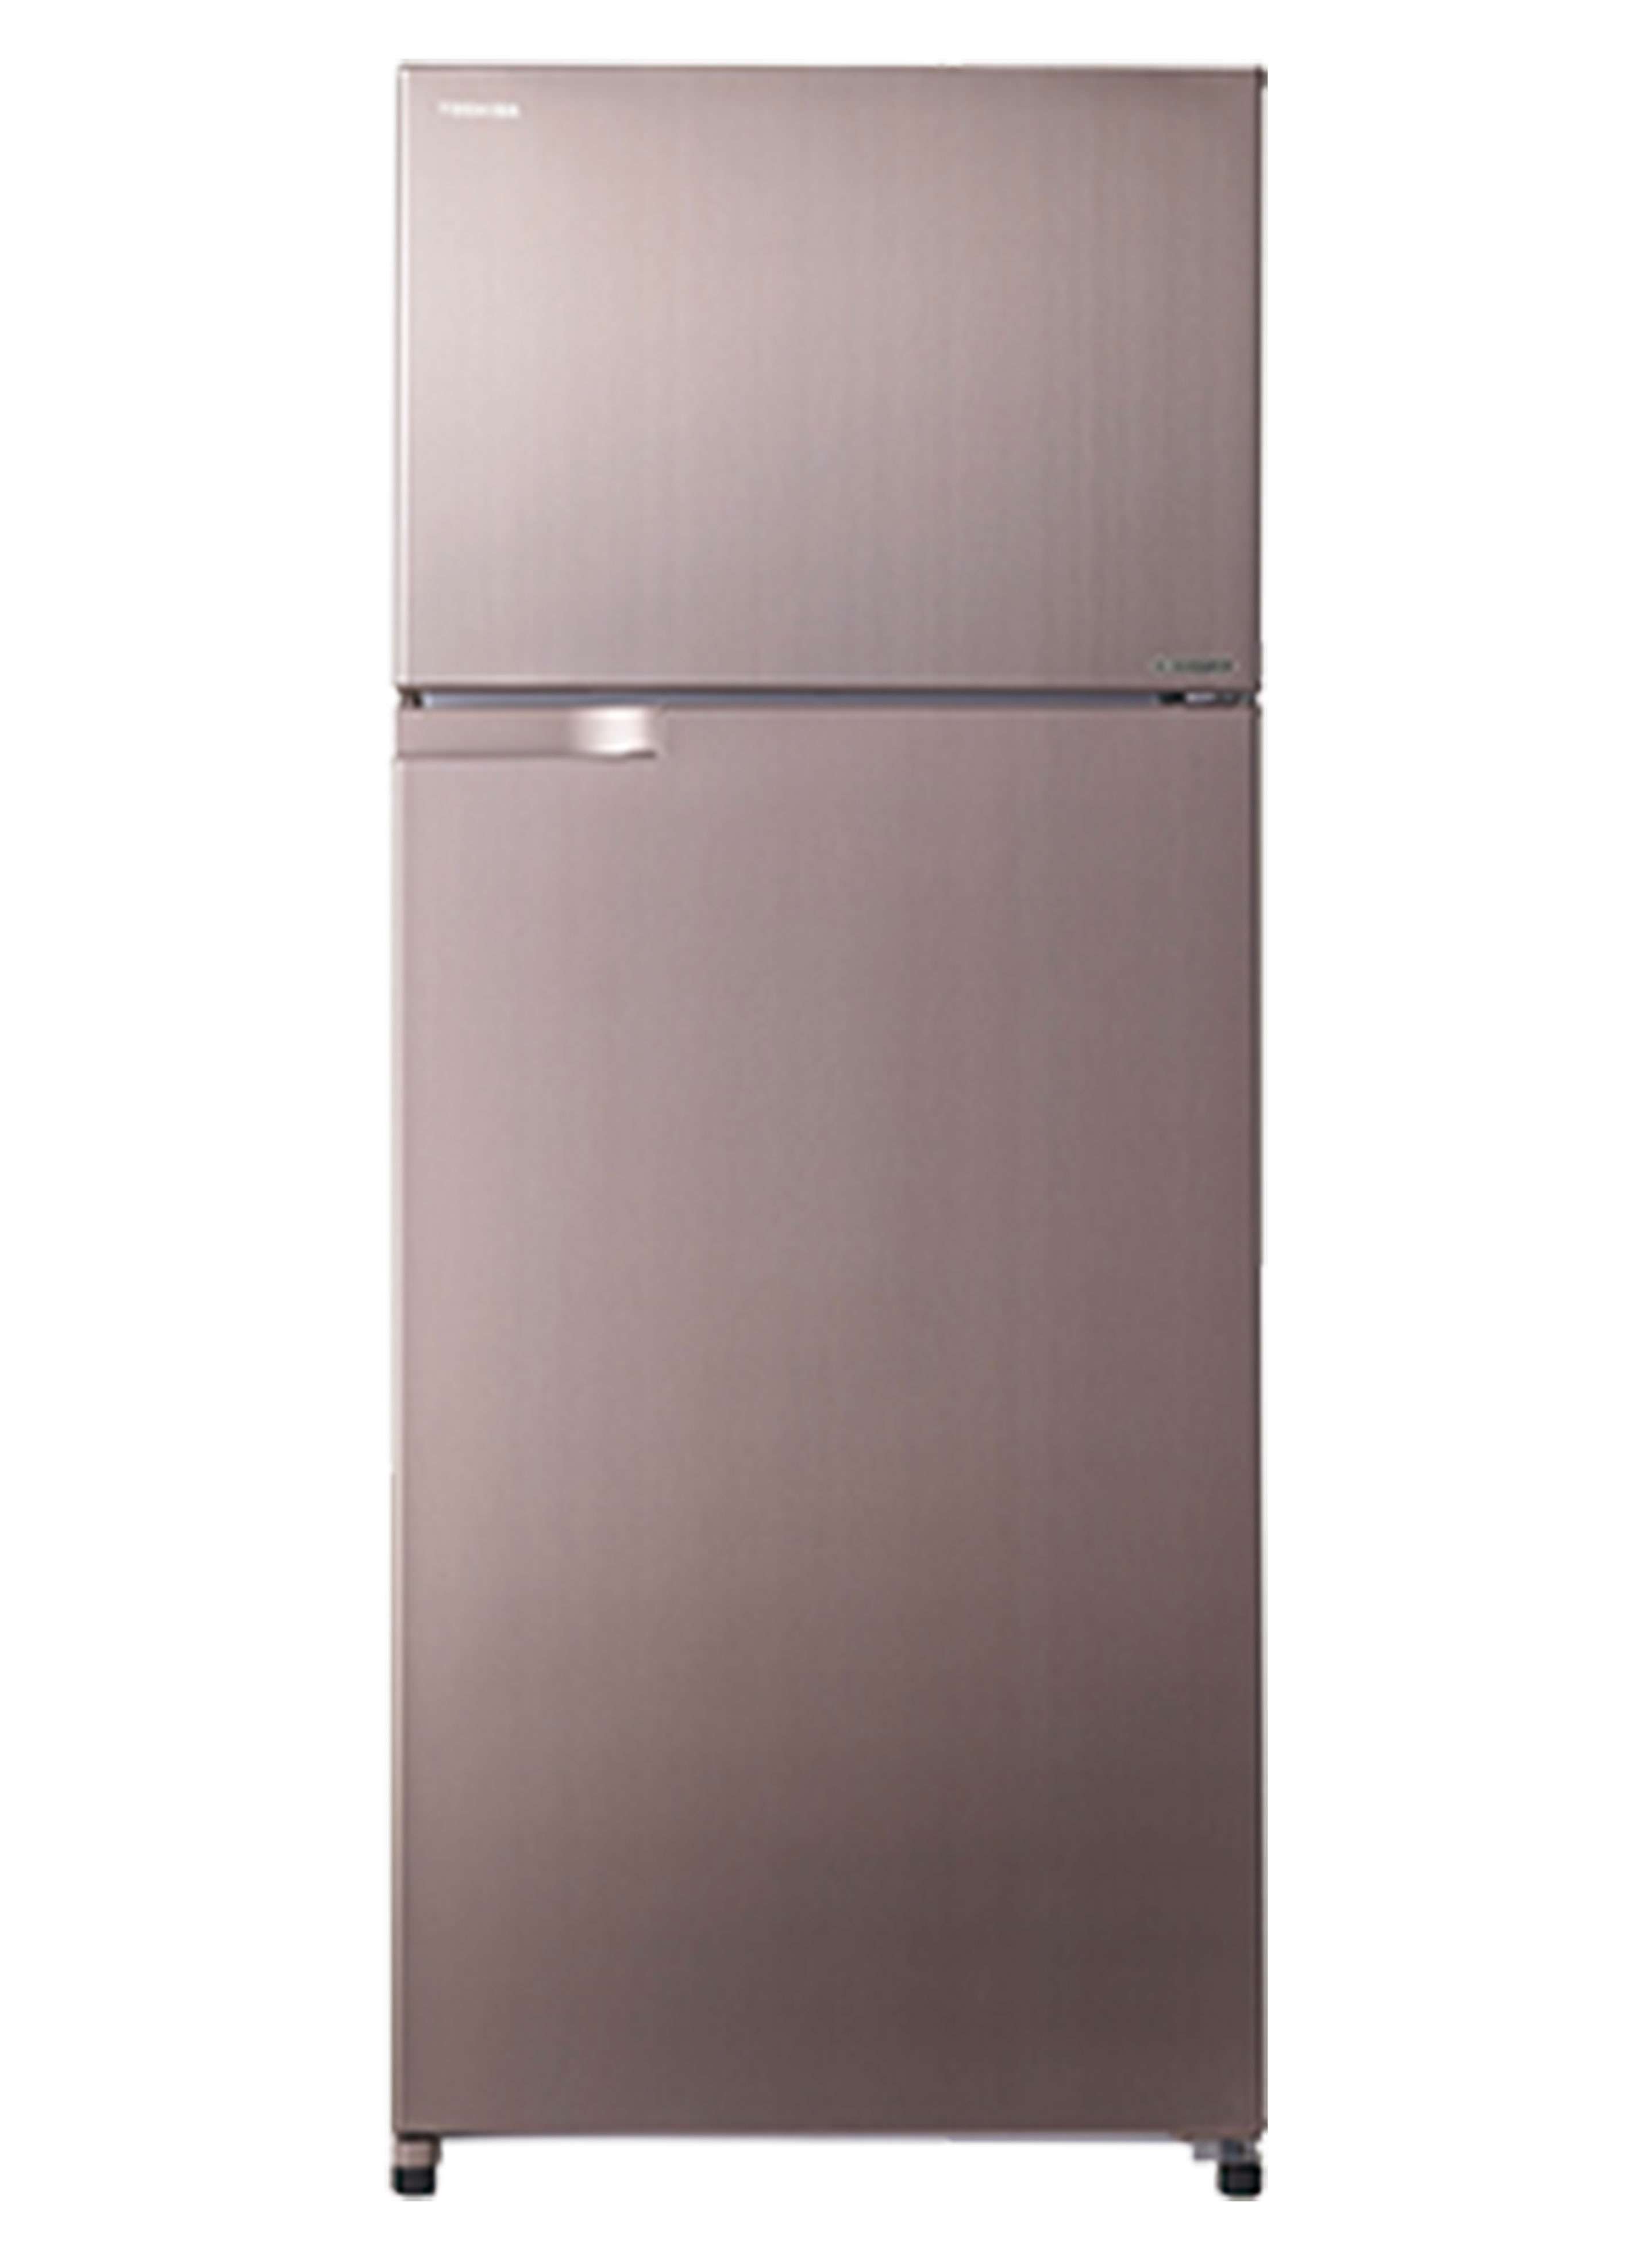 505L Refrigerator Reddish Gold